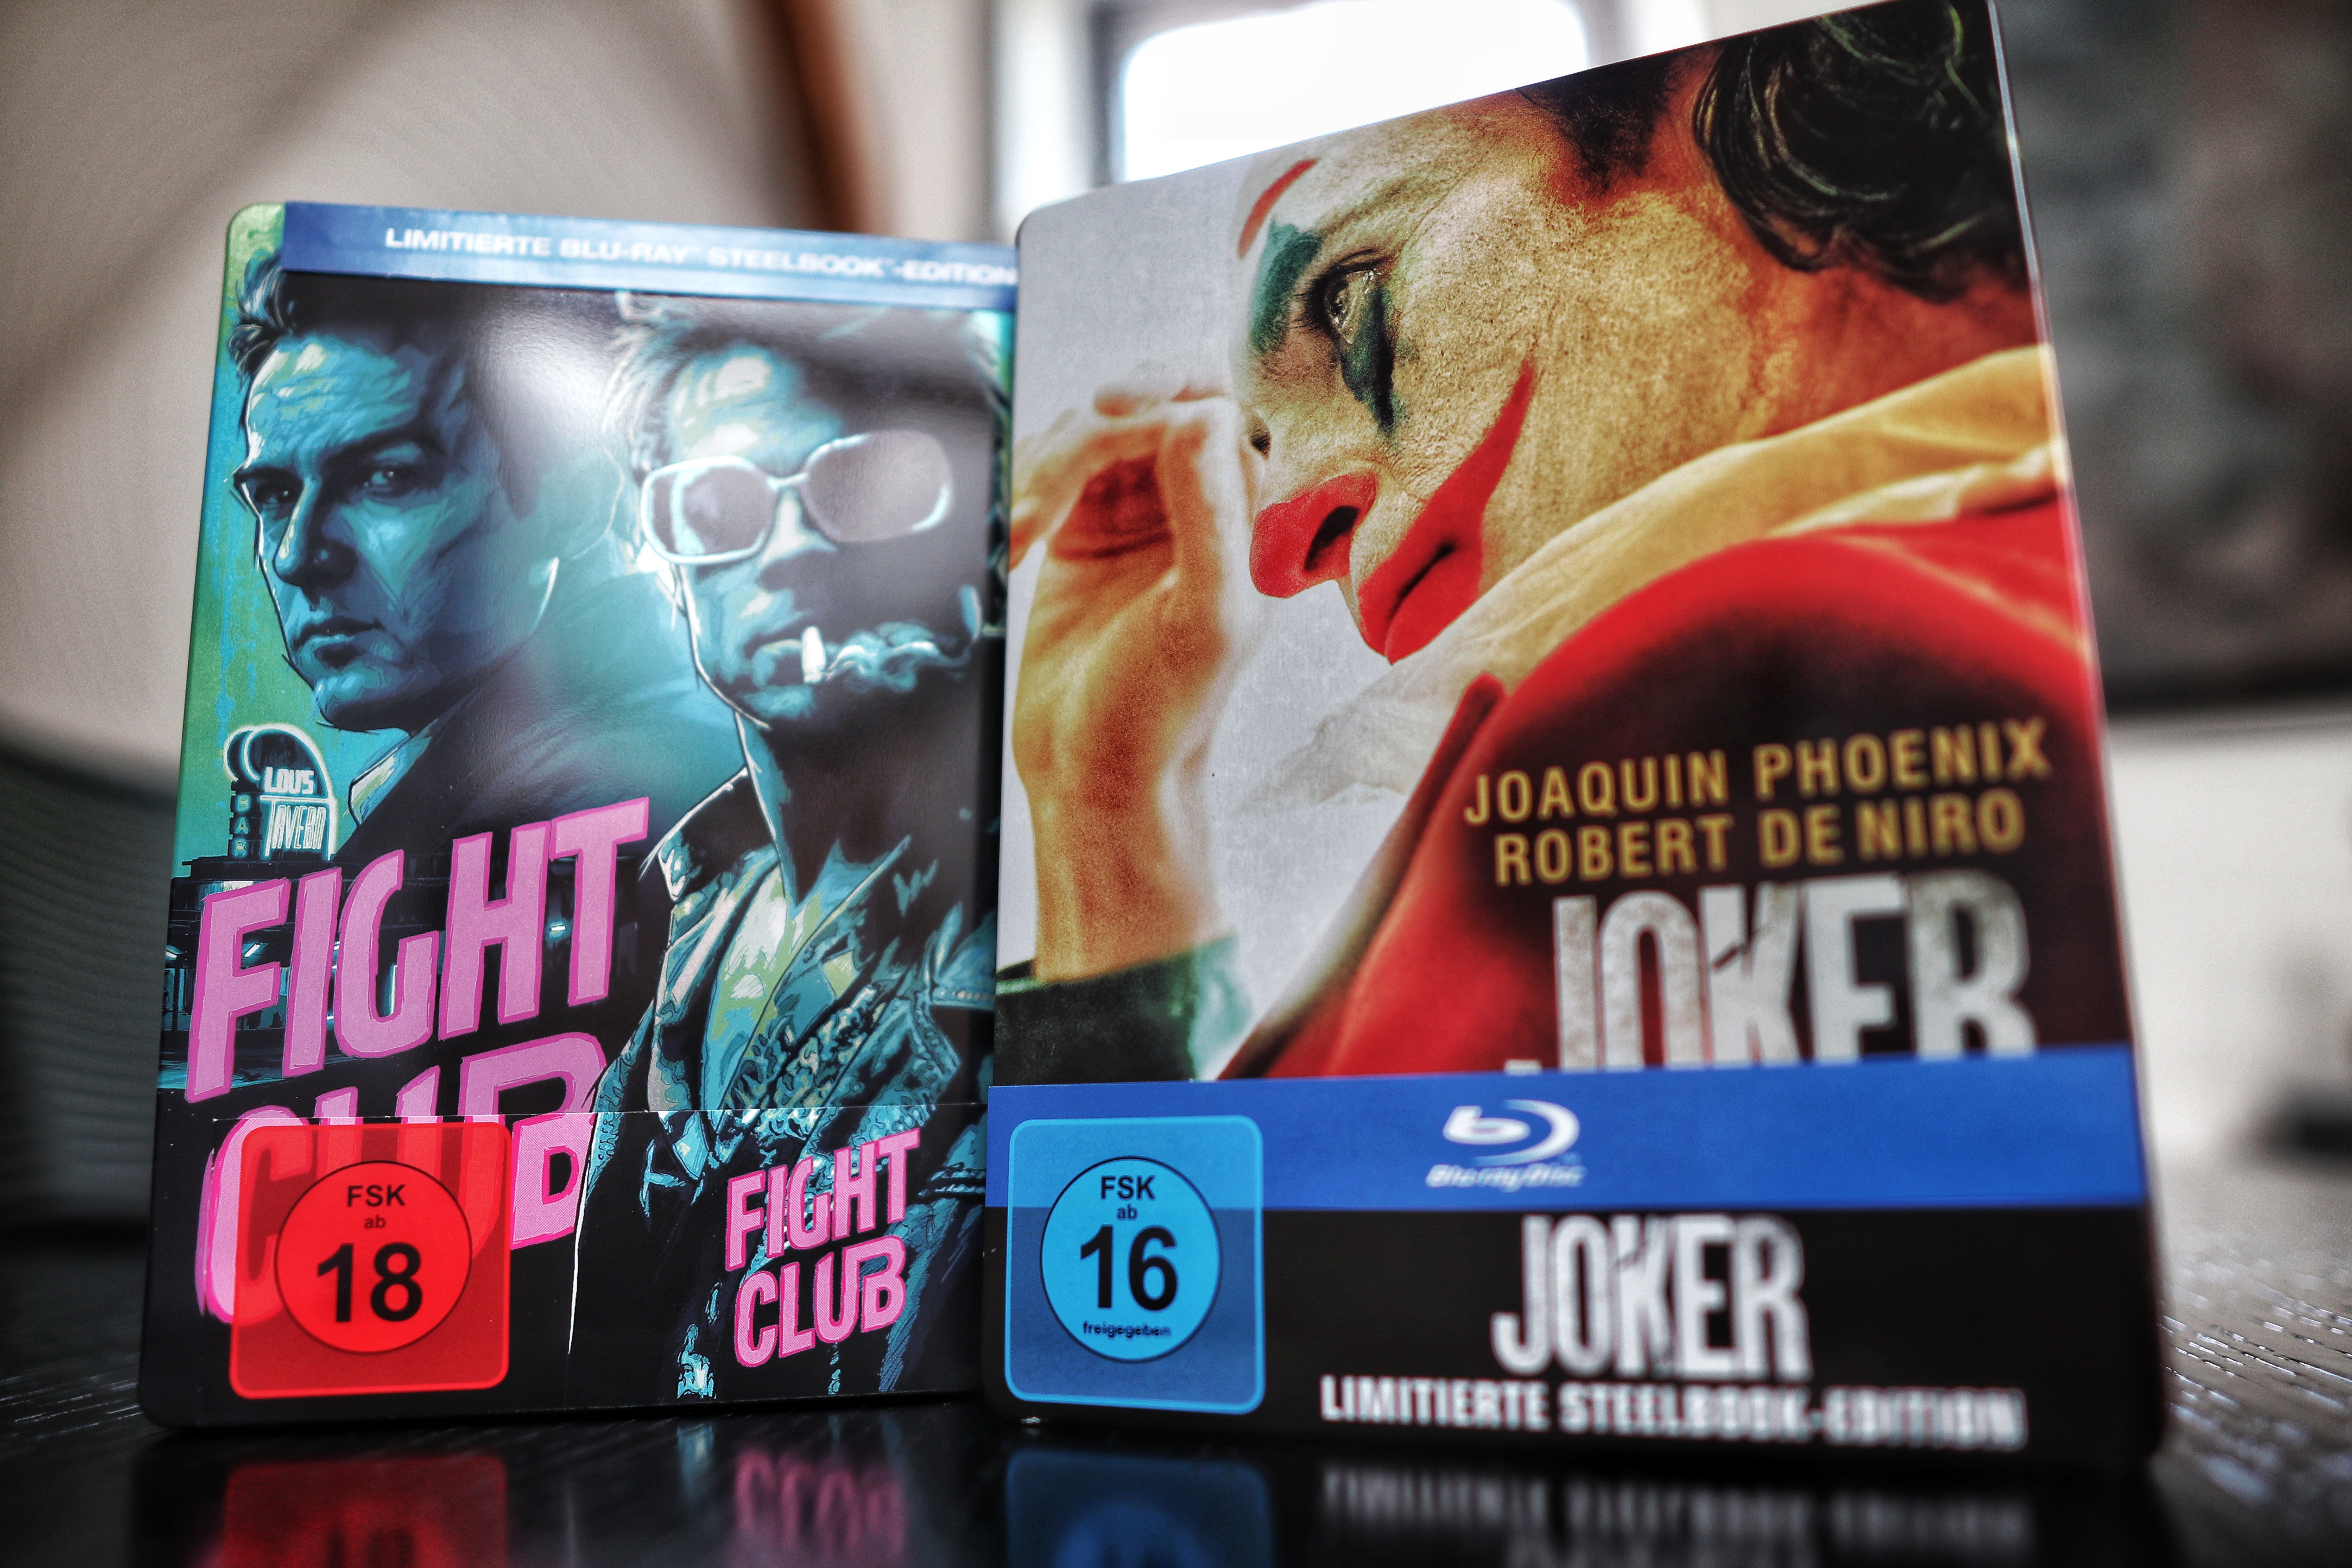 Joker und Fight Club Blu-Rays